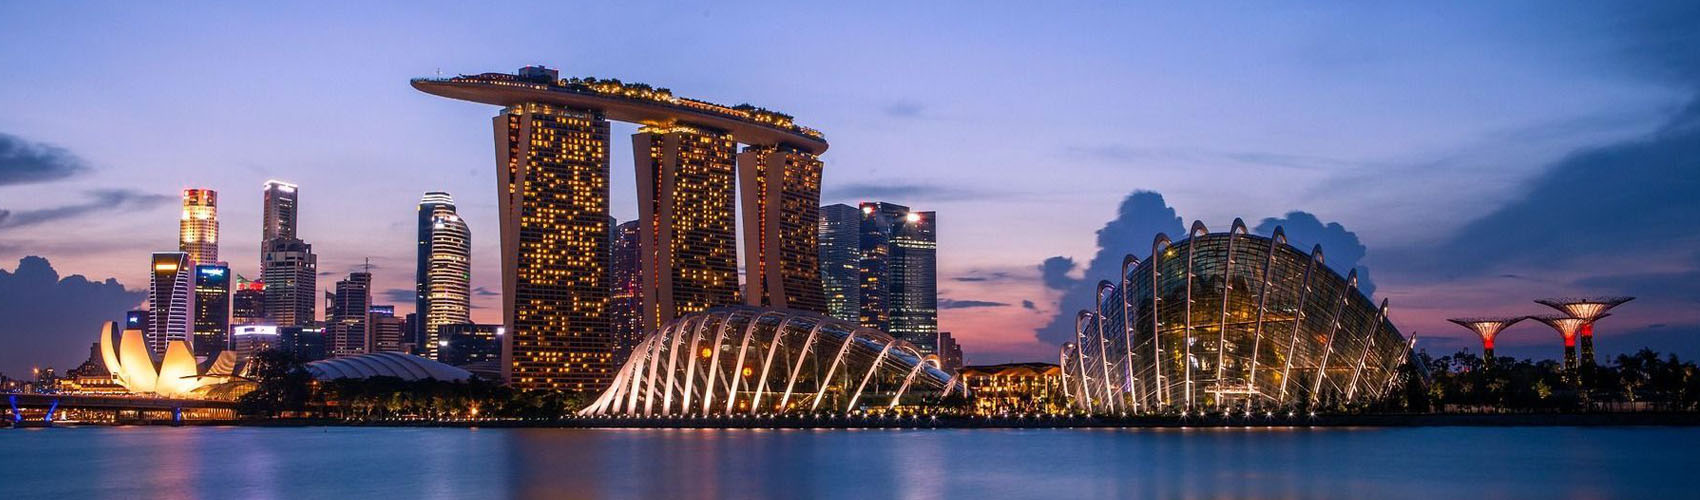 Staying oneday - Singapore